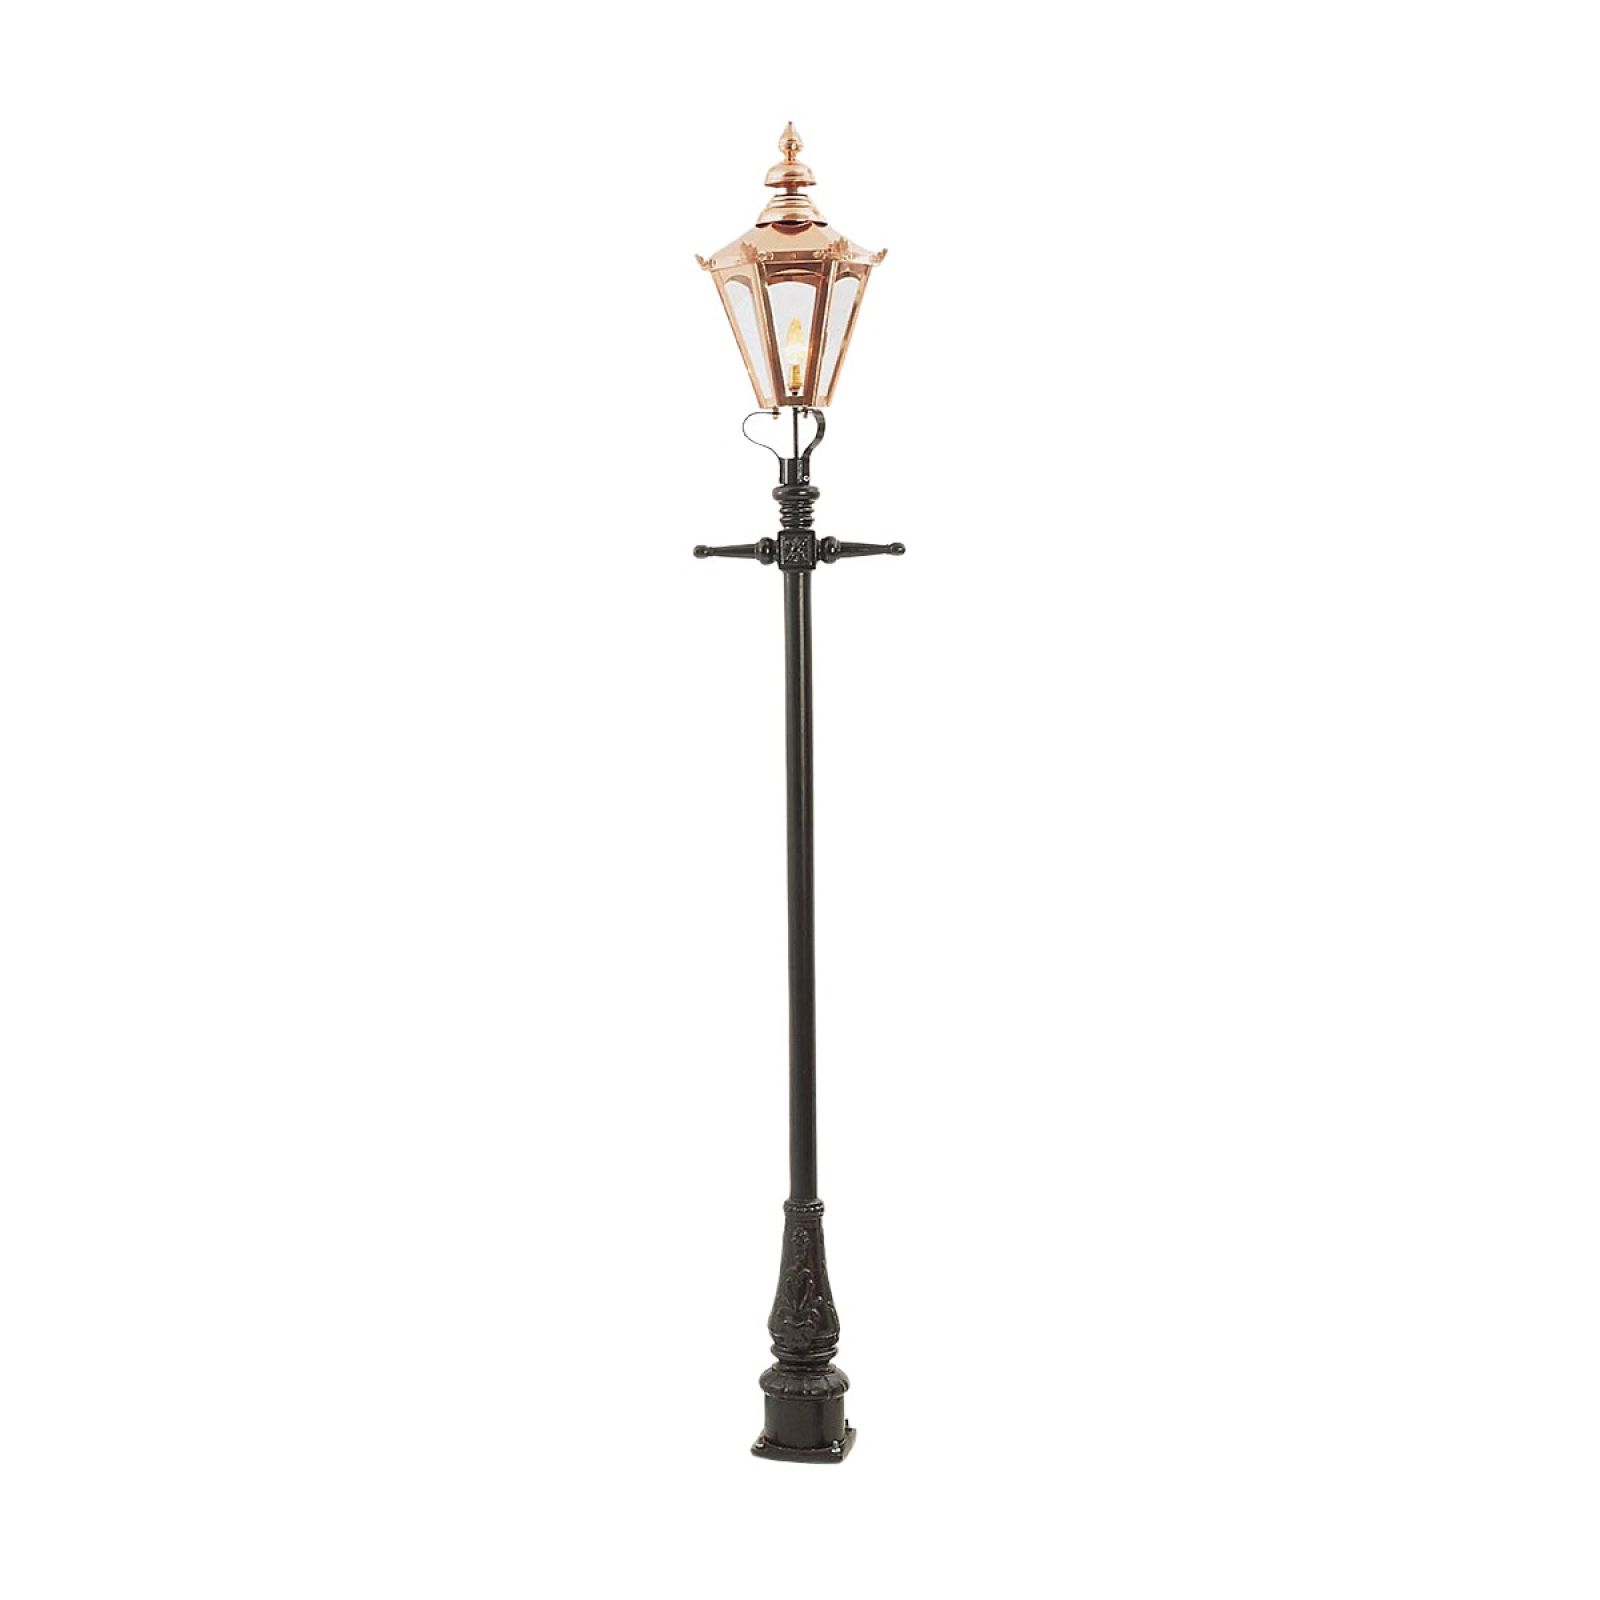 Lamp post 2690mm high and medium copper hexagonal lantern